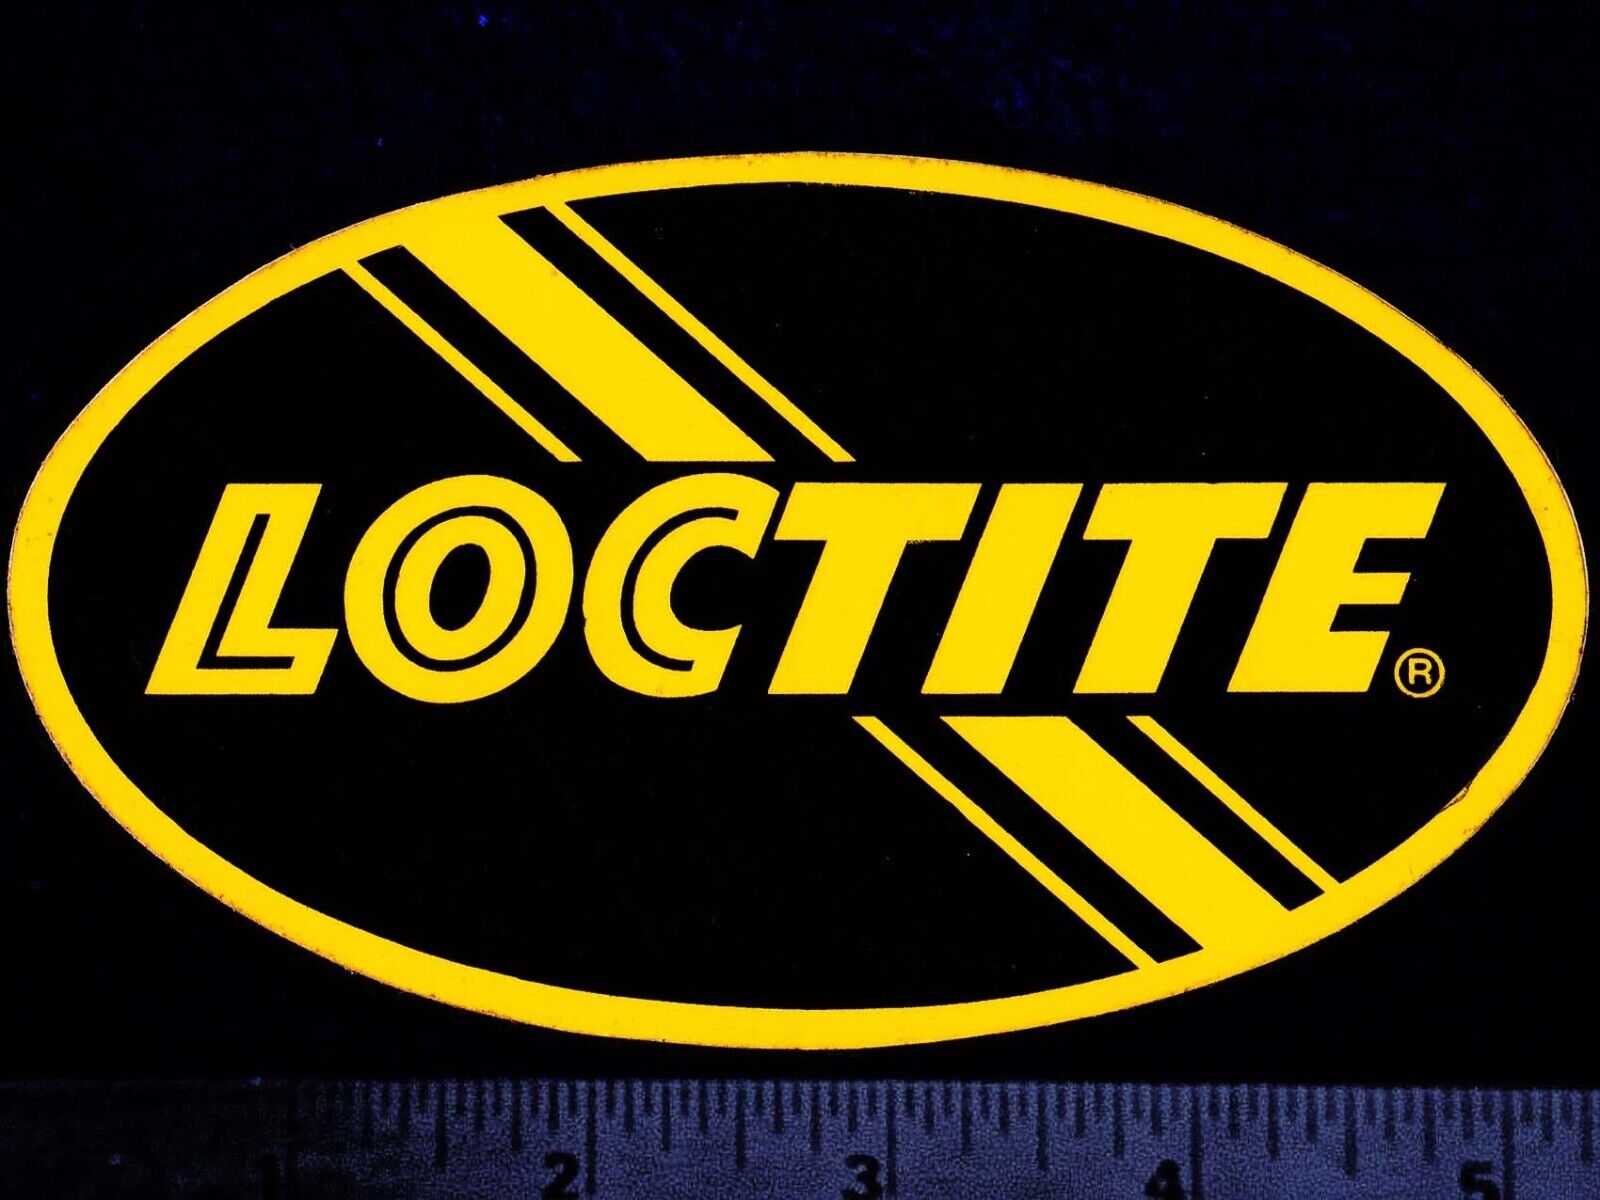 LOCTITE - Original Vintage 1960’s 70's Racing Decal/Sticker - 5.25” size